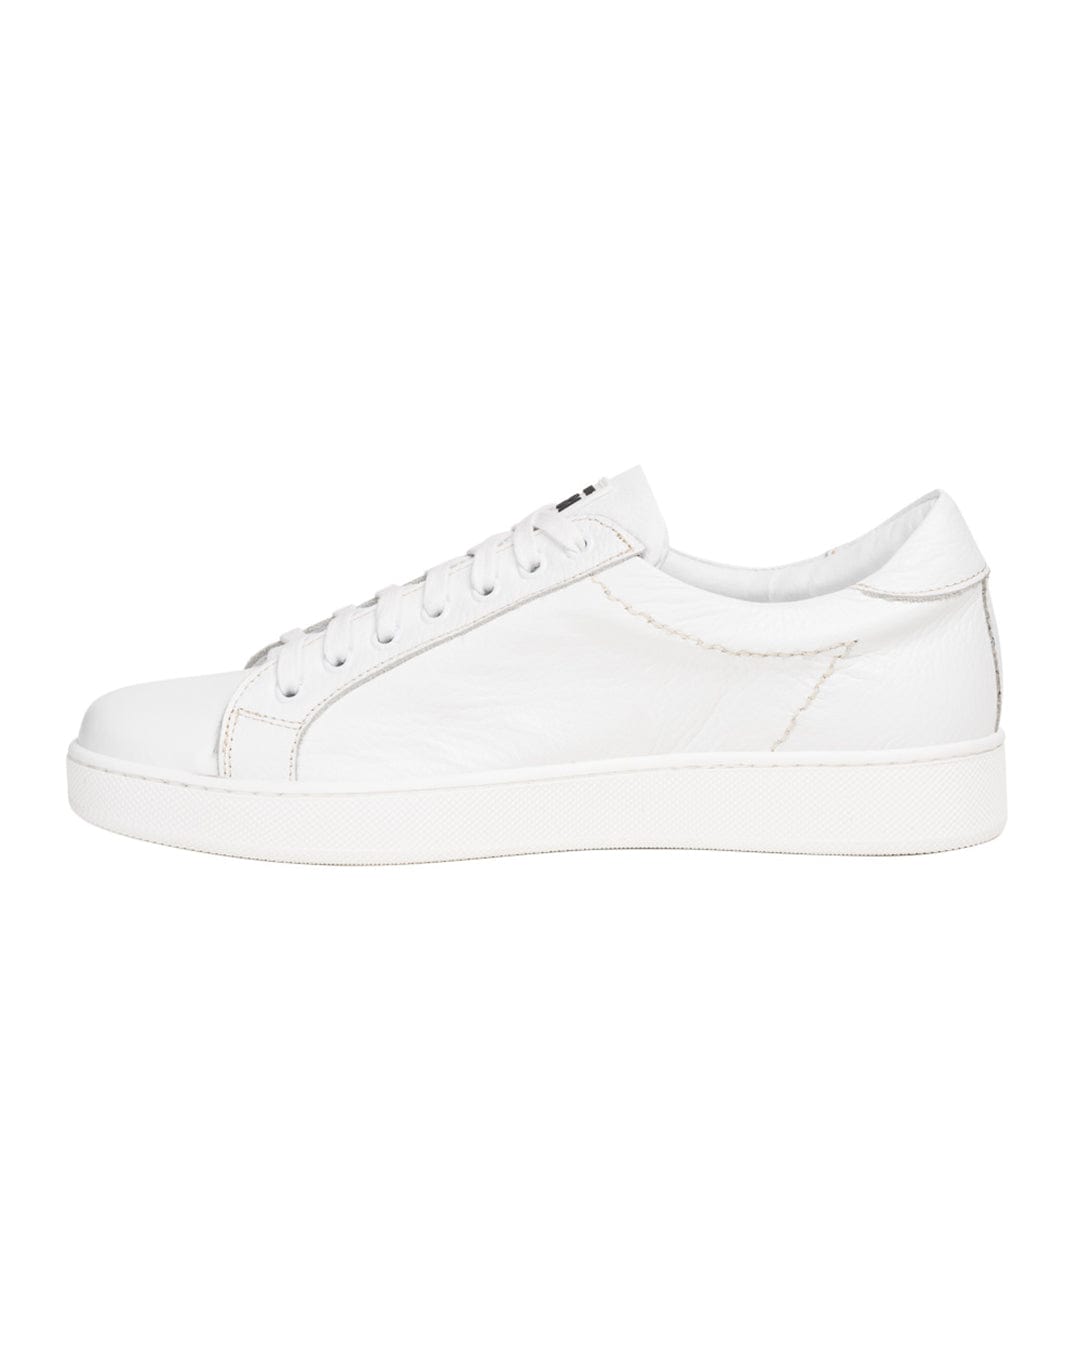 Cerruti Shoes Cerruti I88I White Leather Sneakers